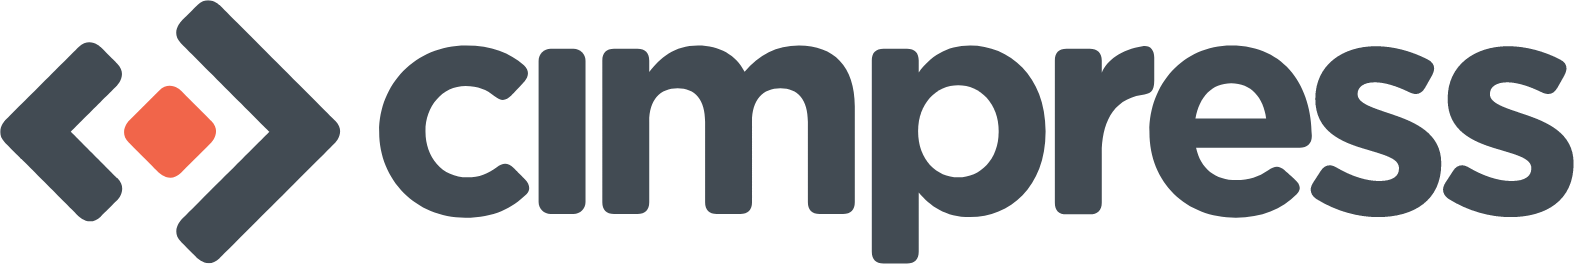 Cimpress logo large (transparent PNG)